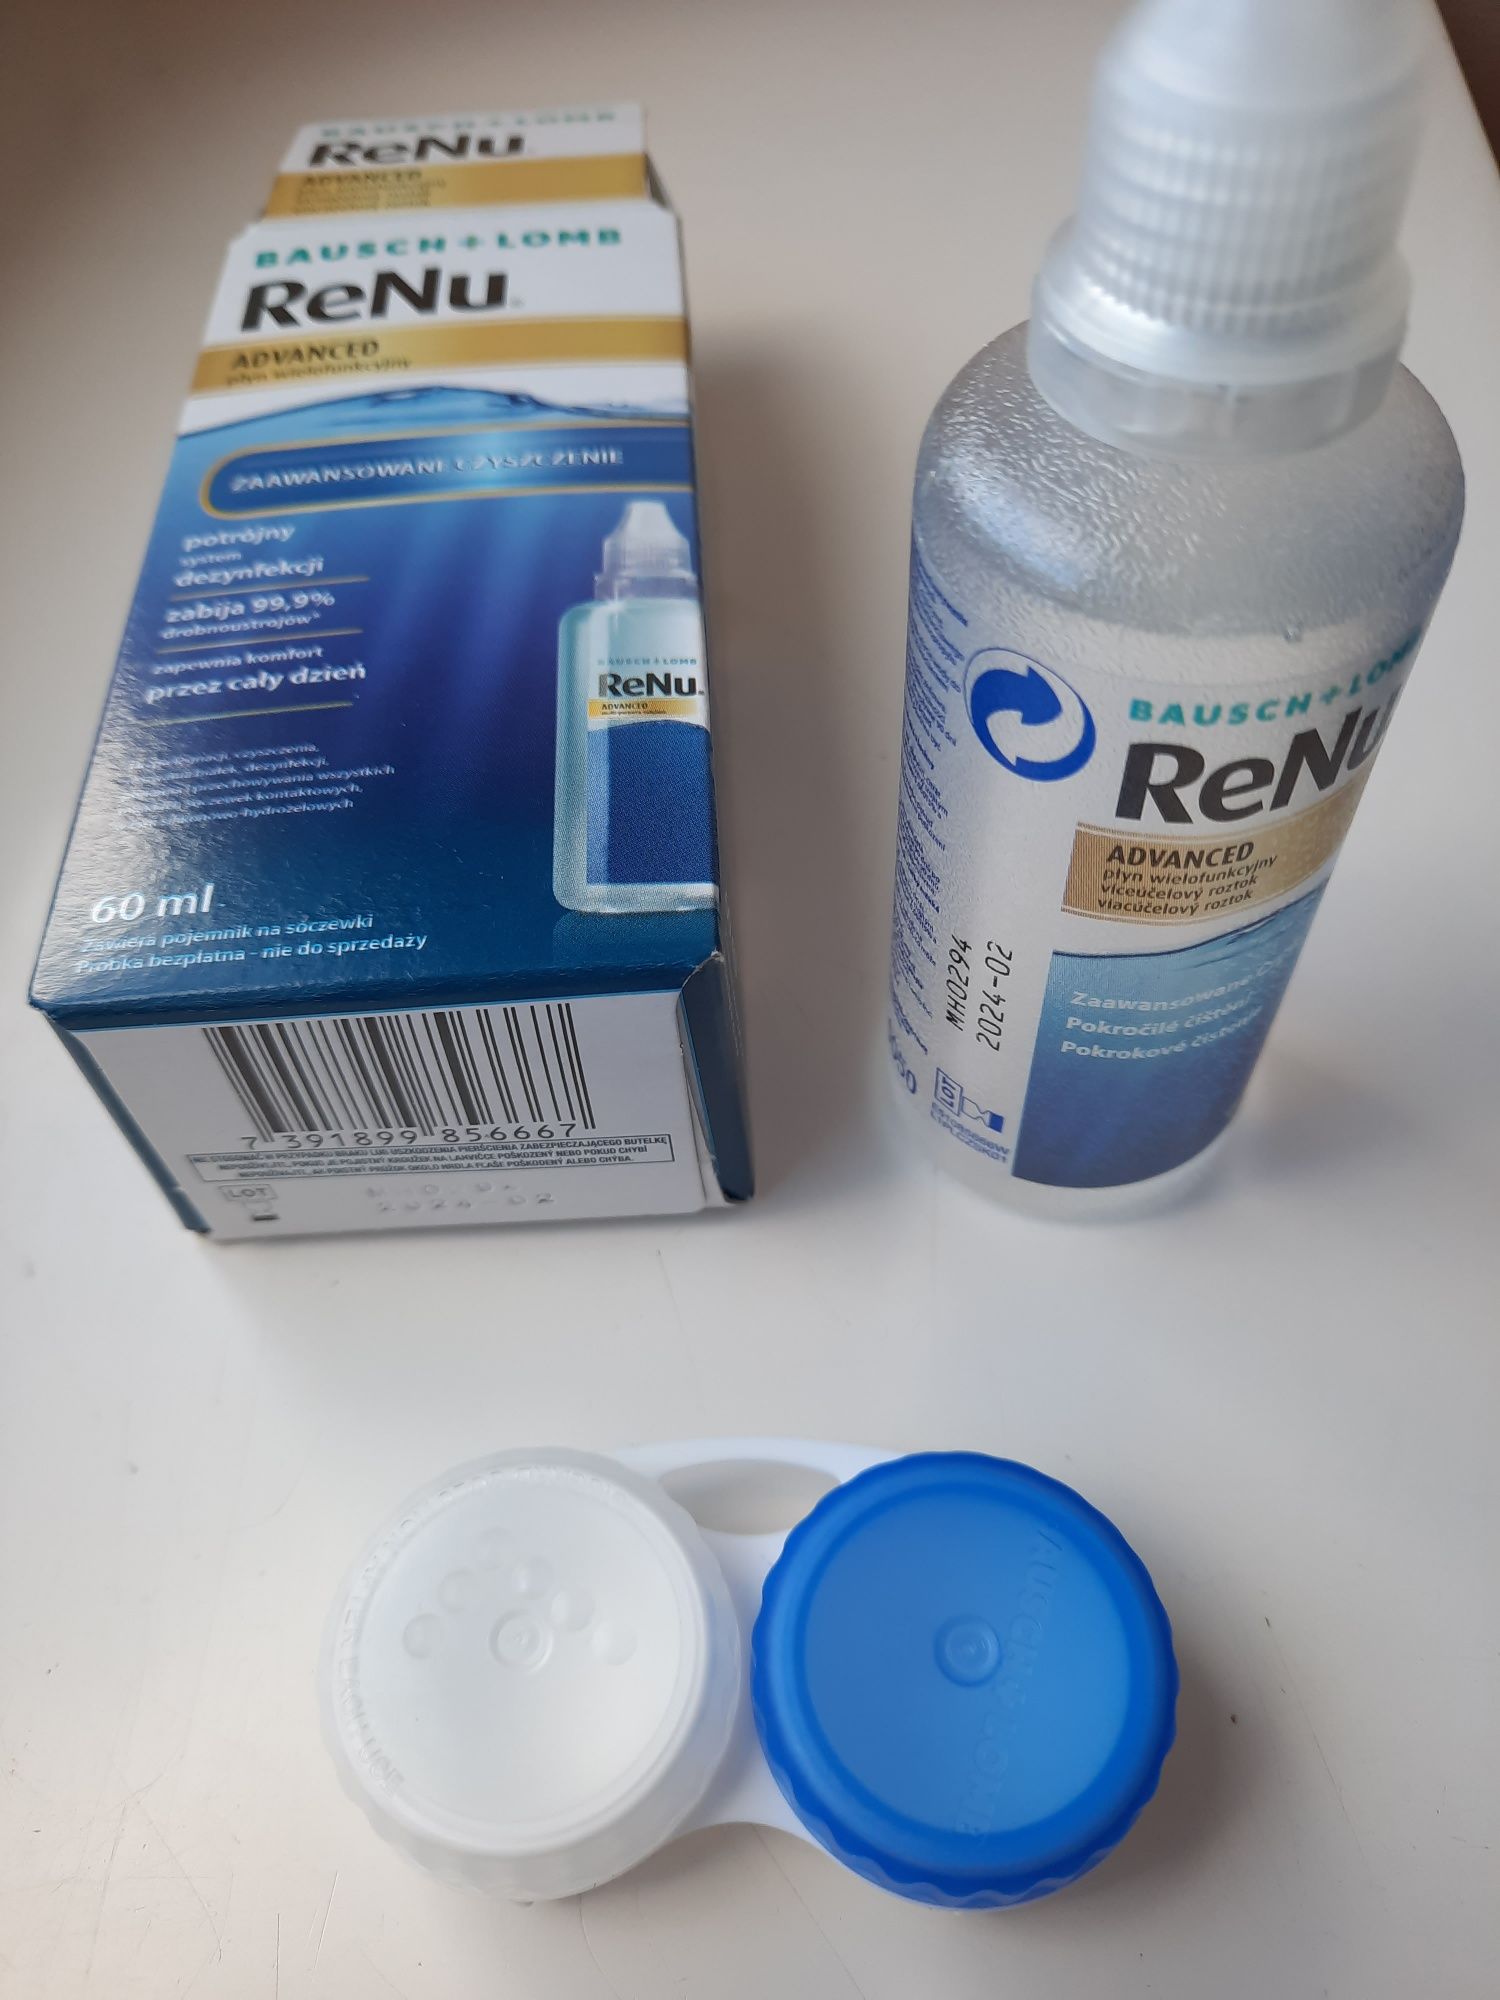 RENU Multiplus 60 ml soczewki płyn Bausch + Lomb